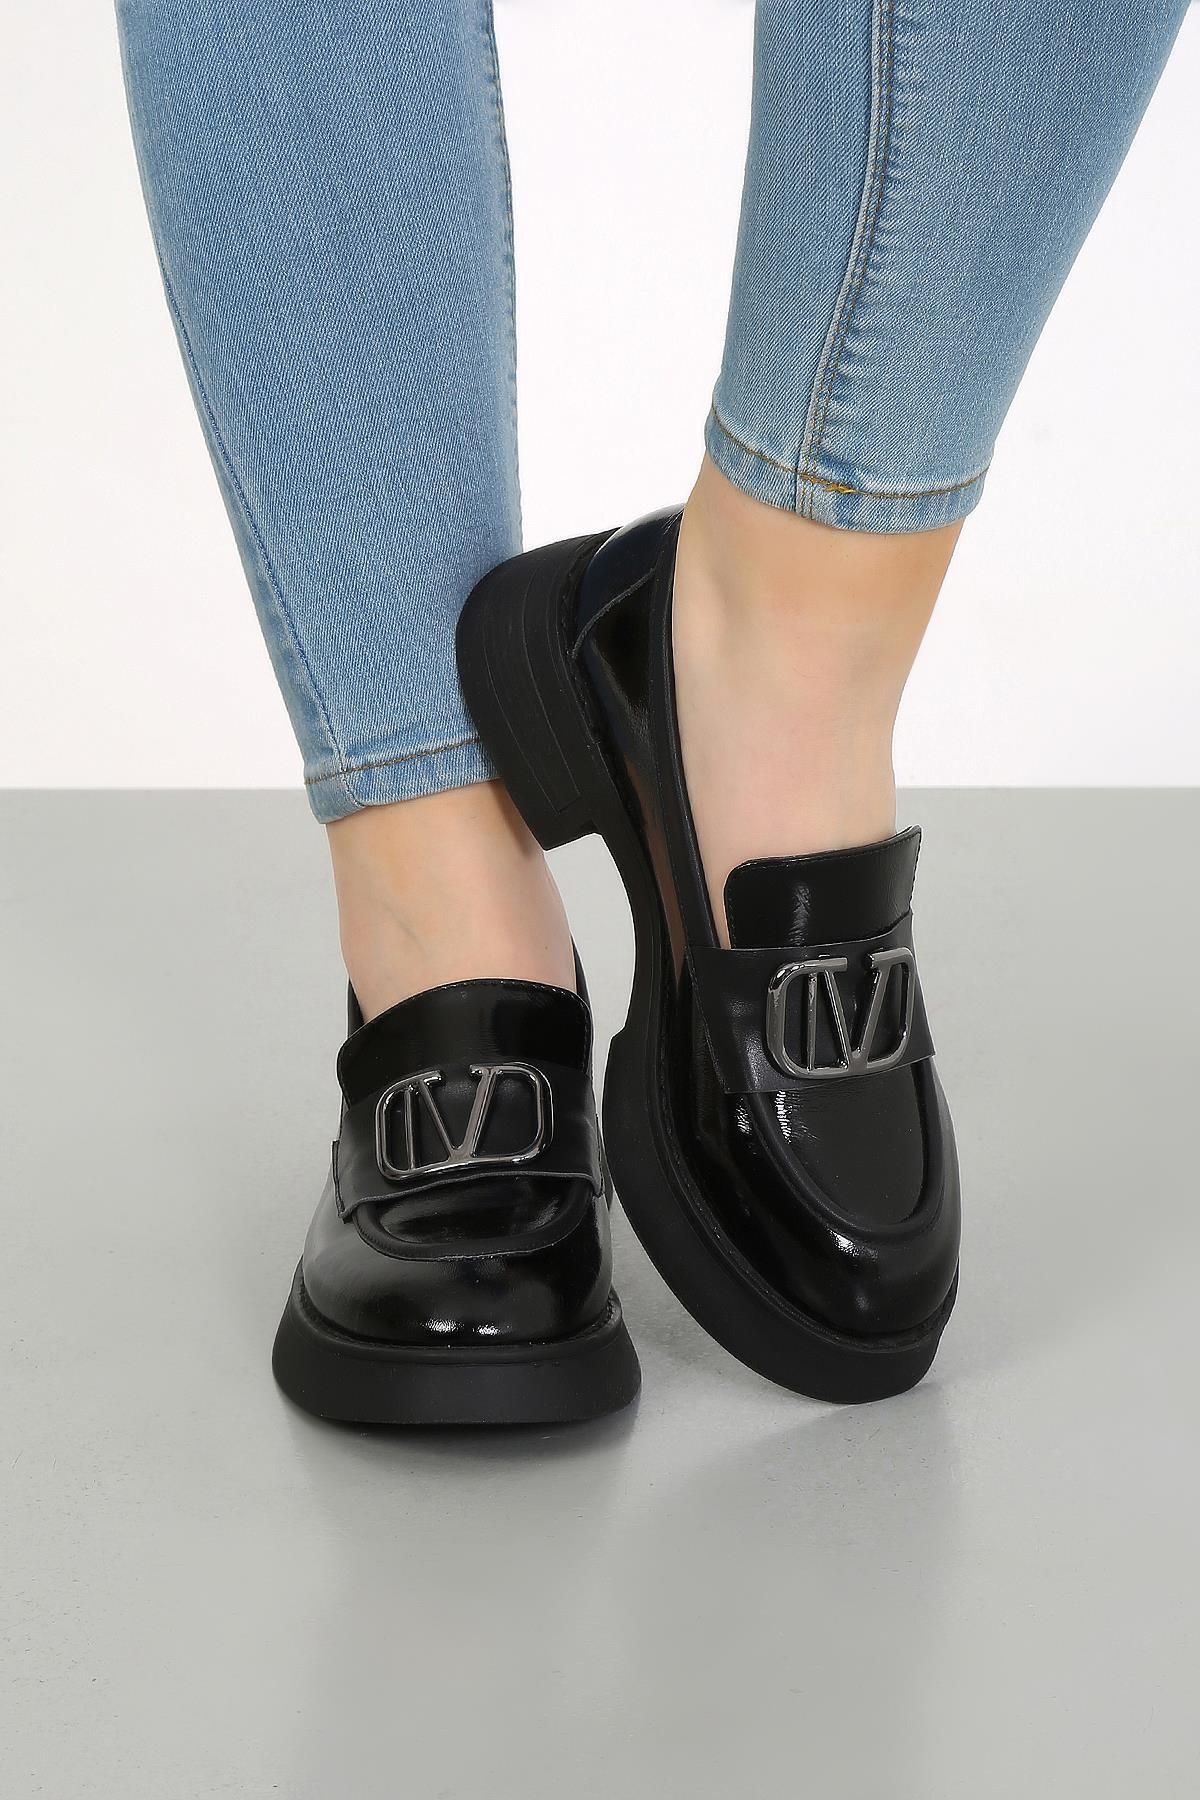 CassidoShoes Siyah Rugan Eva Taban Toka Aksesuar Detaylı Kadın Casual Ayakkabı 010-4044